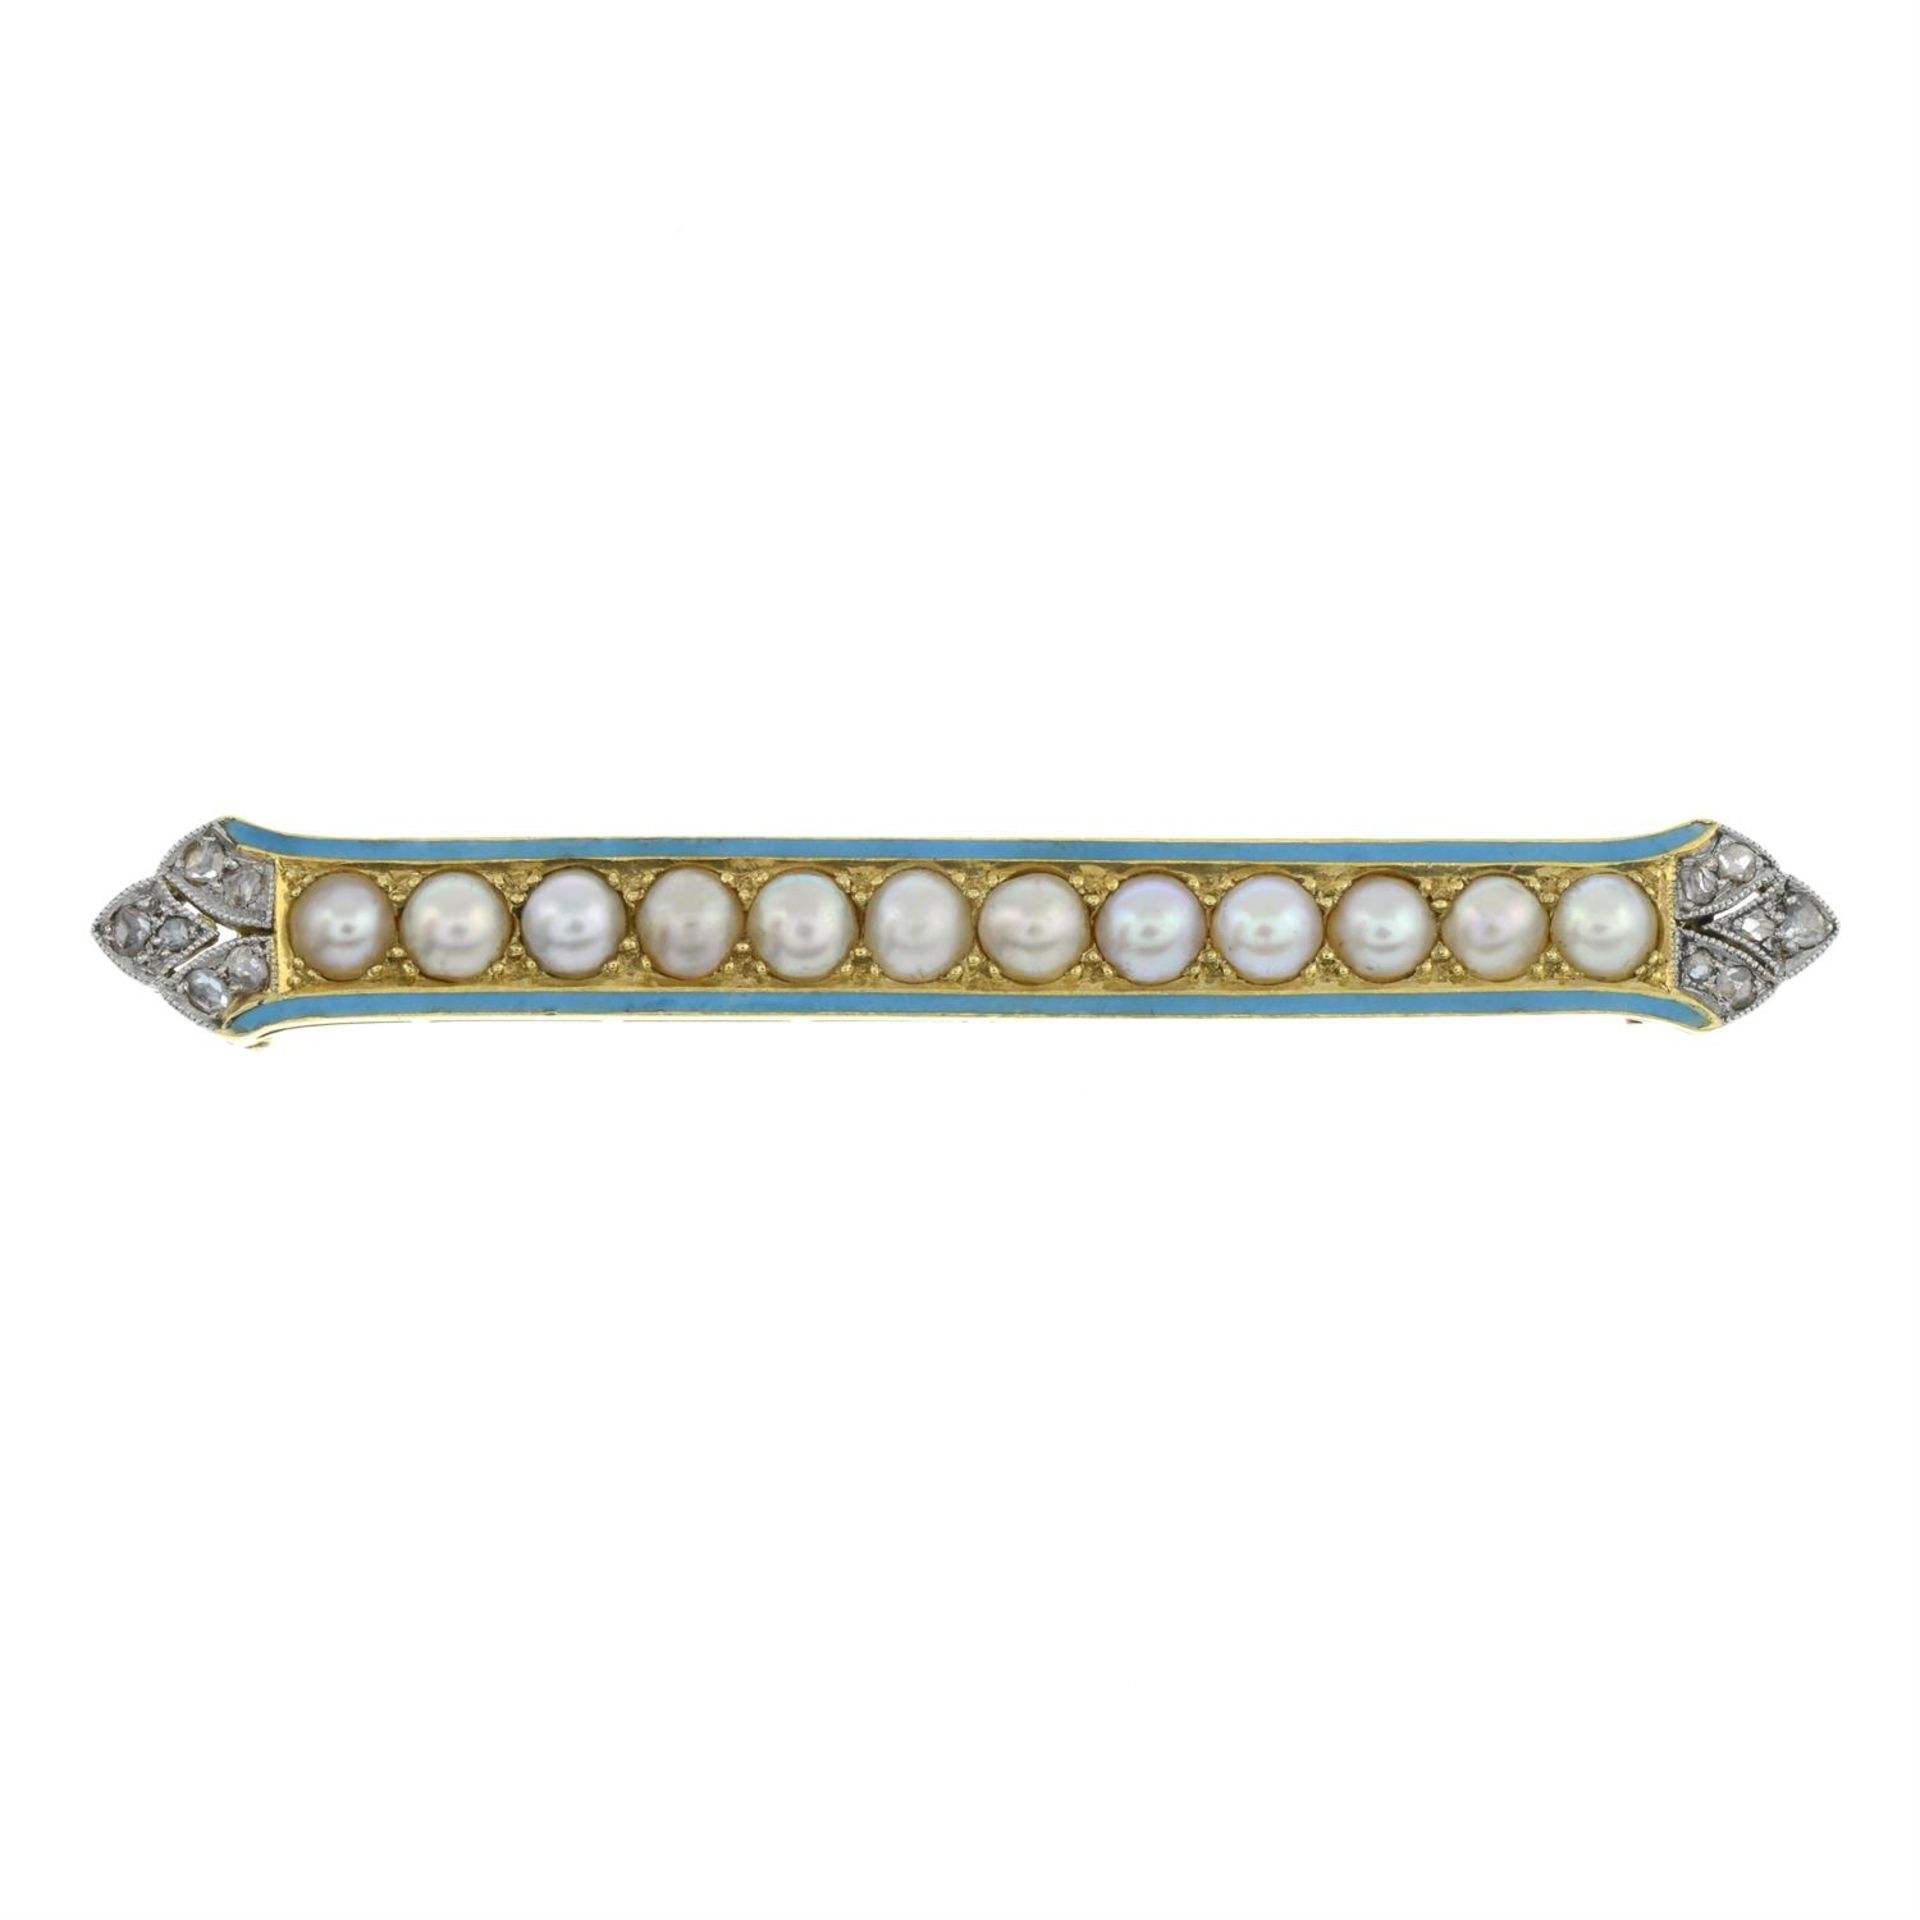 A late 19th century gold split pearl, rose-cut diamond and blue enamel brooch.